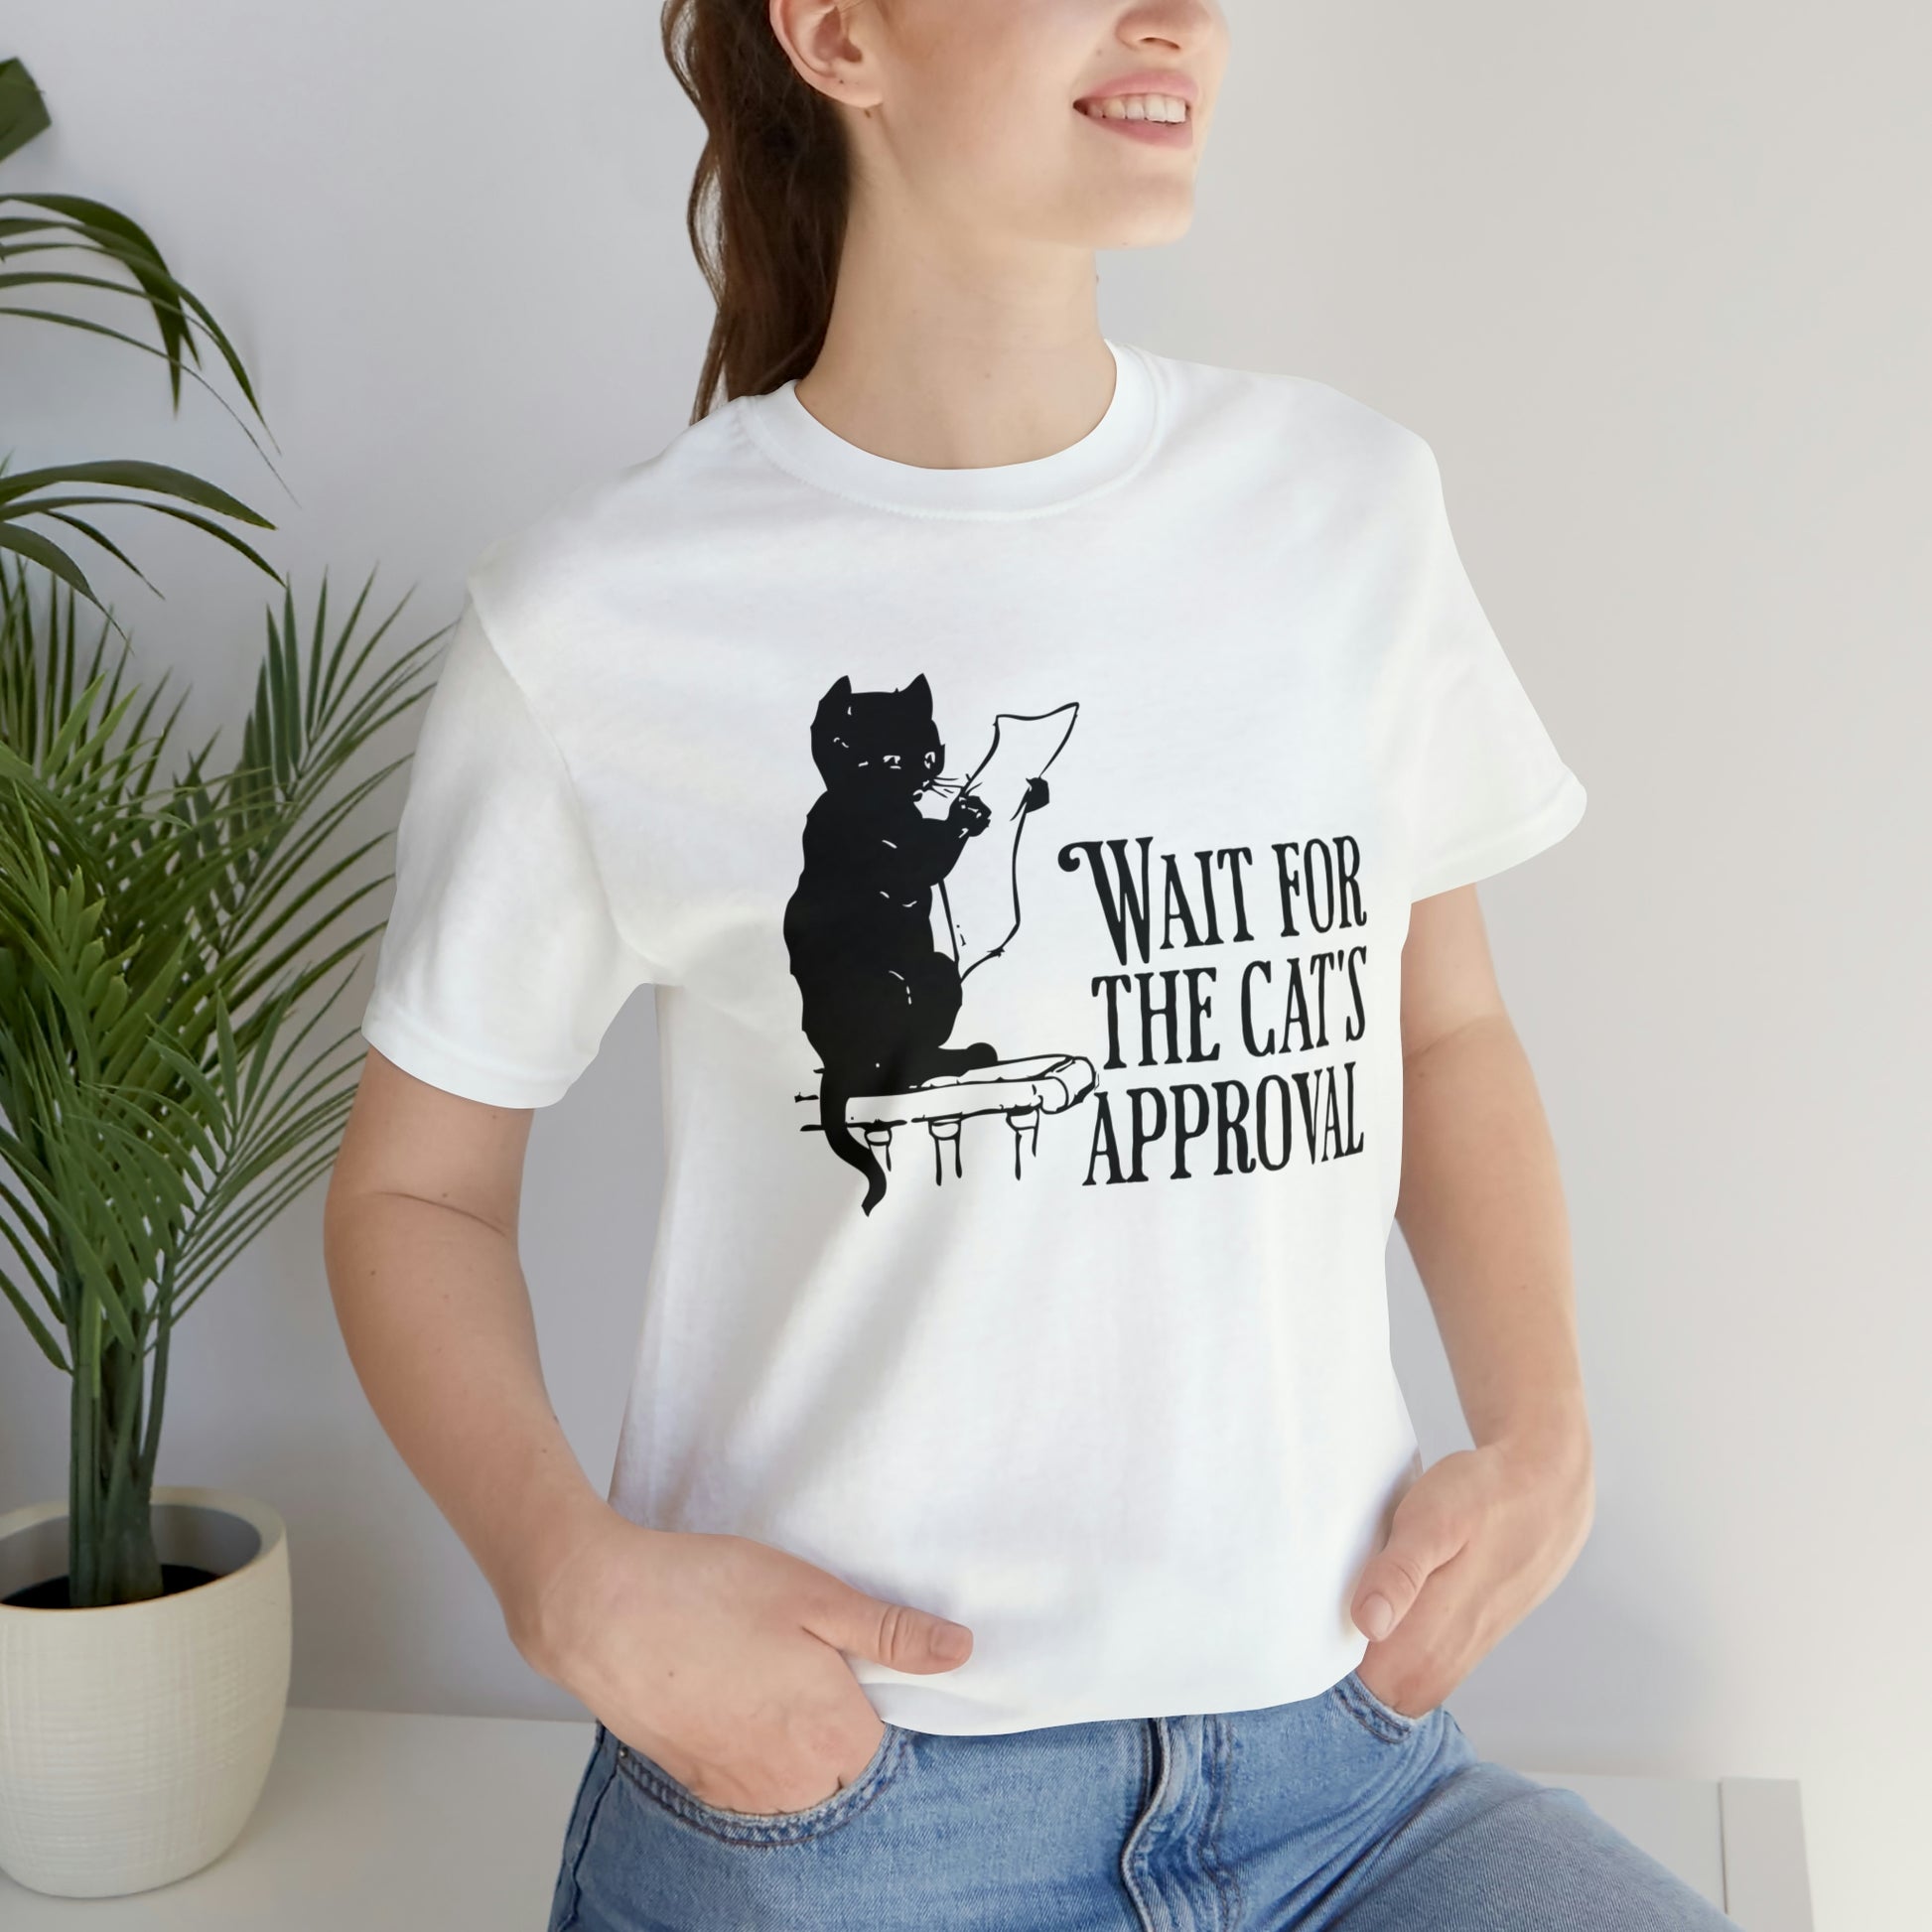 Funny Cat Quote T-Shirt, witty cat shirt, sarcastic cat shirt, cat lover gift, cat owner shirt, cat mom shirt, cat dad gift, cat mama gift